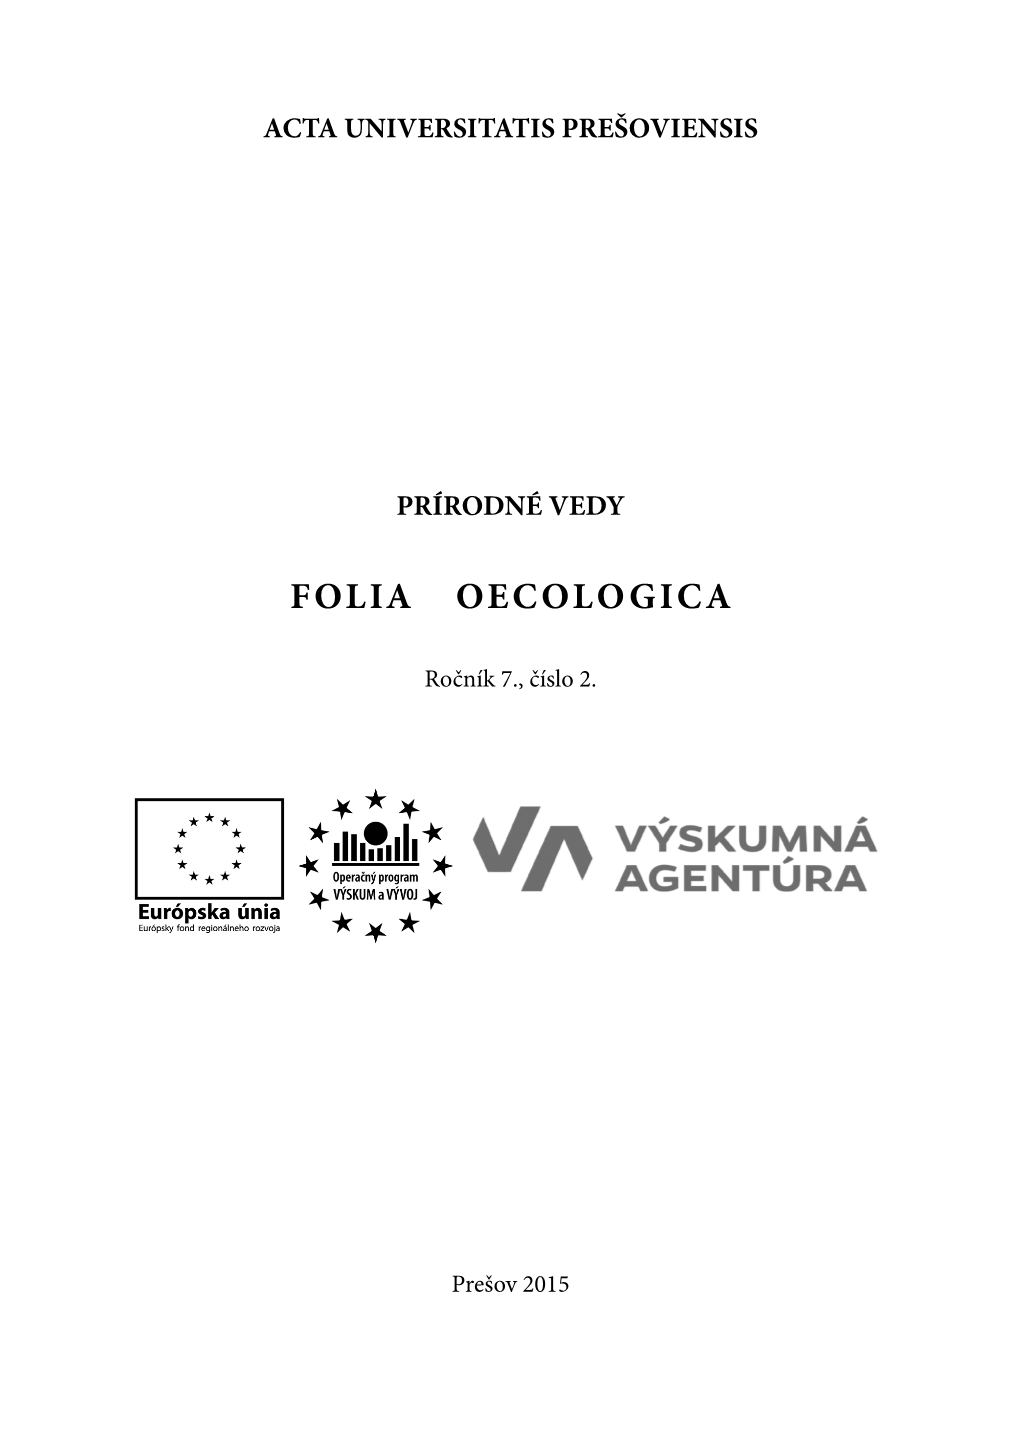 AUP-Folia Oecologica-2015-Vol.7,No.2.Pdf